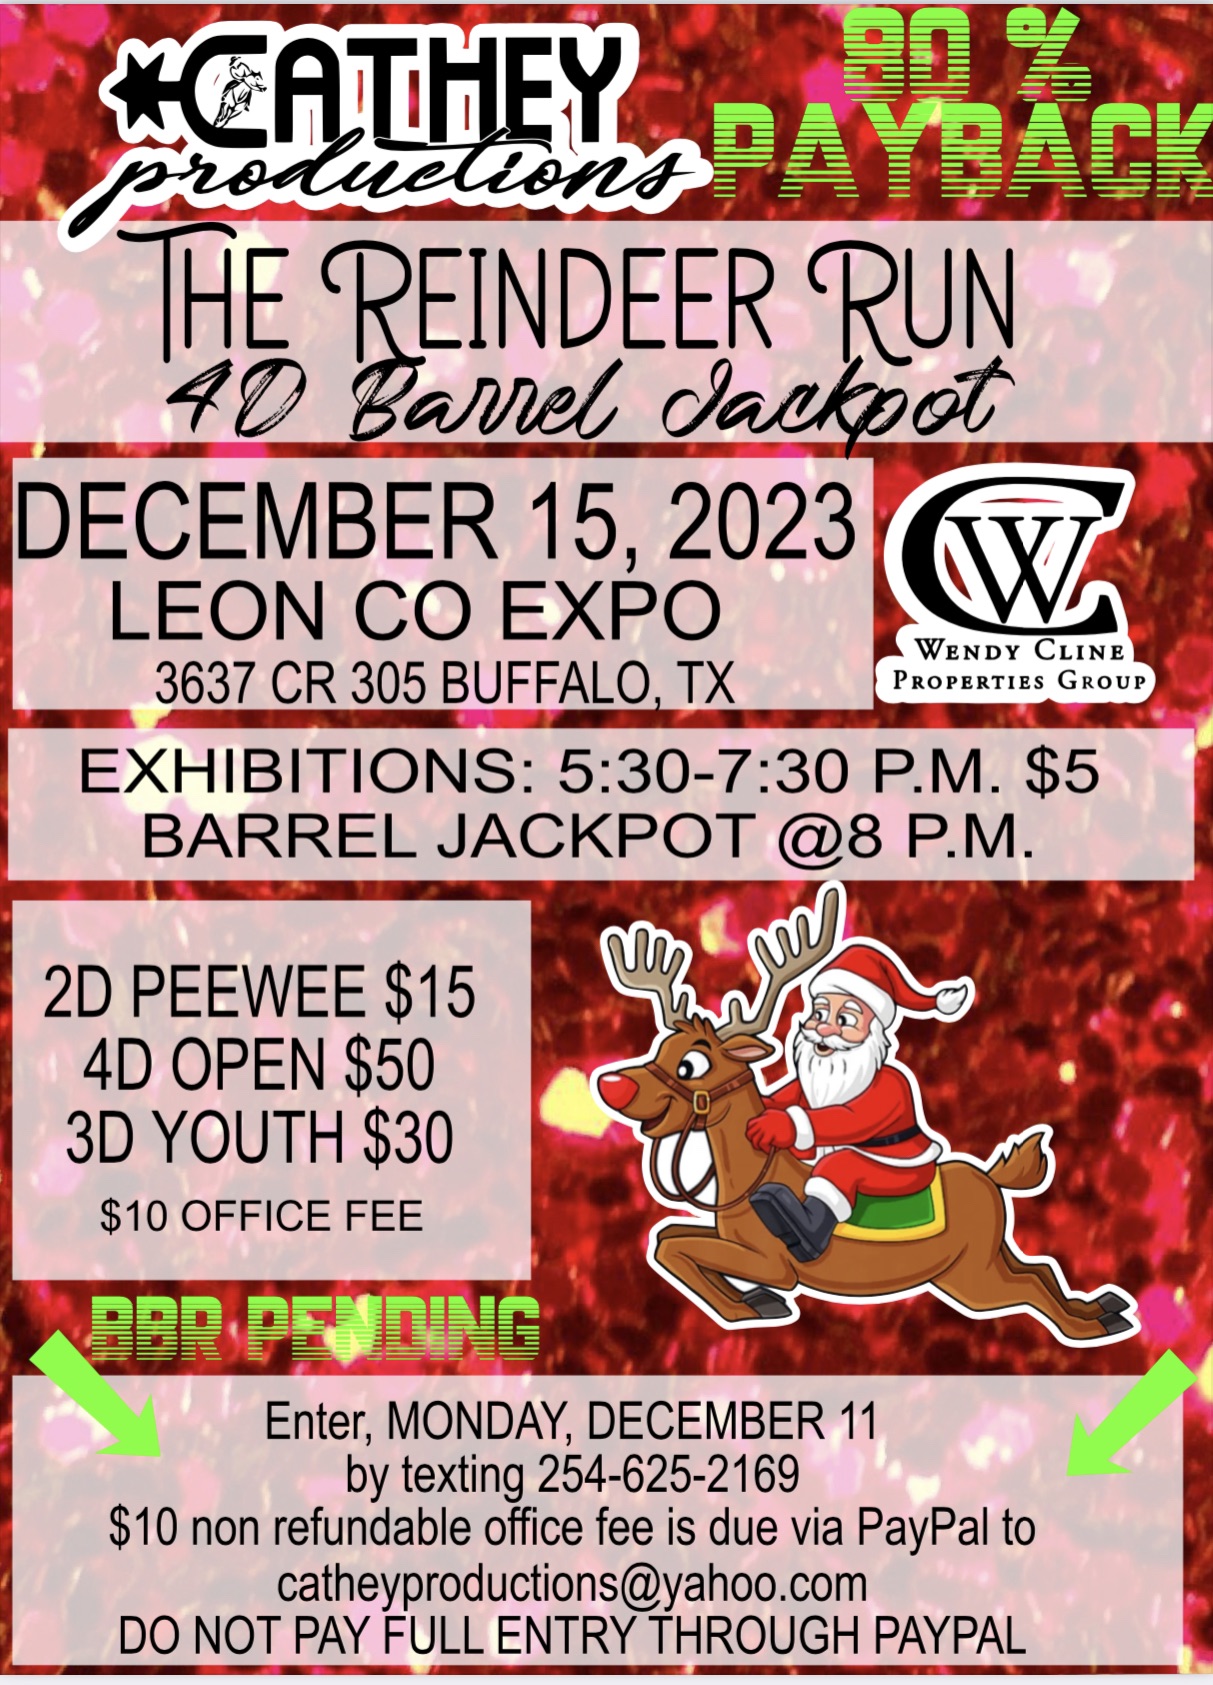 The Reindeer Run